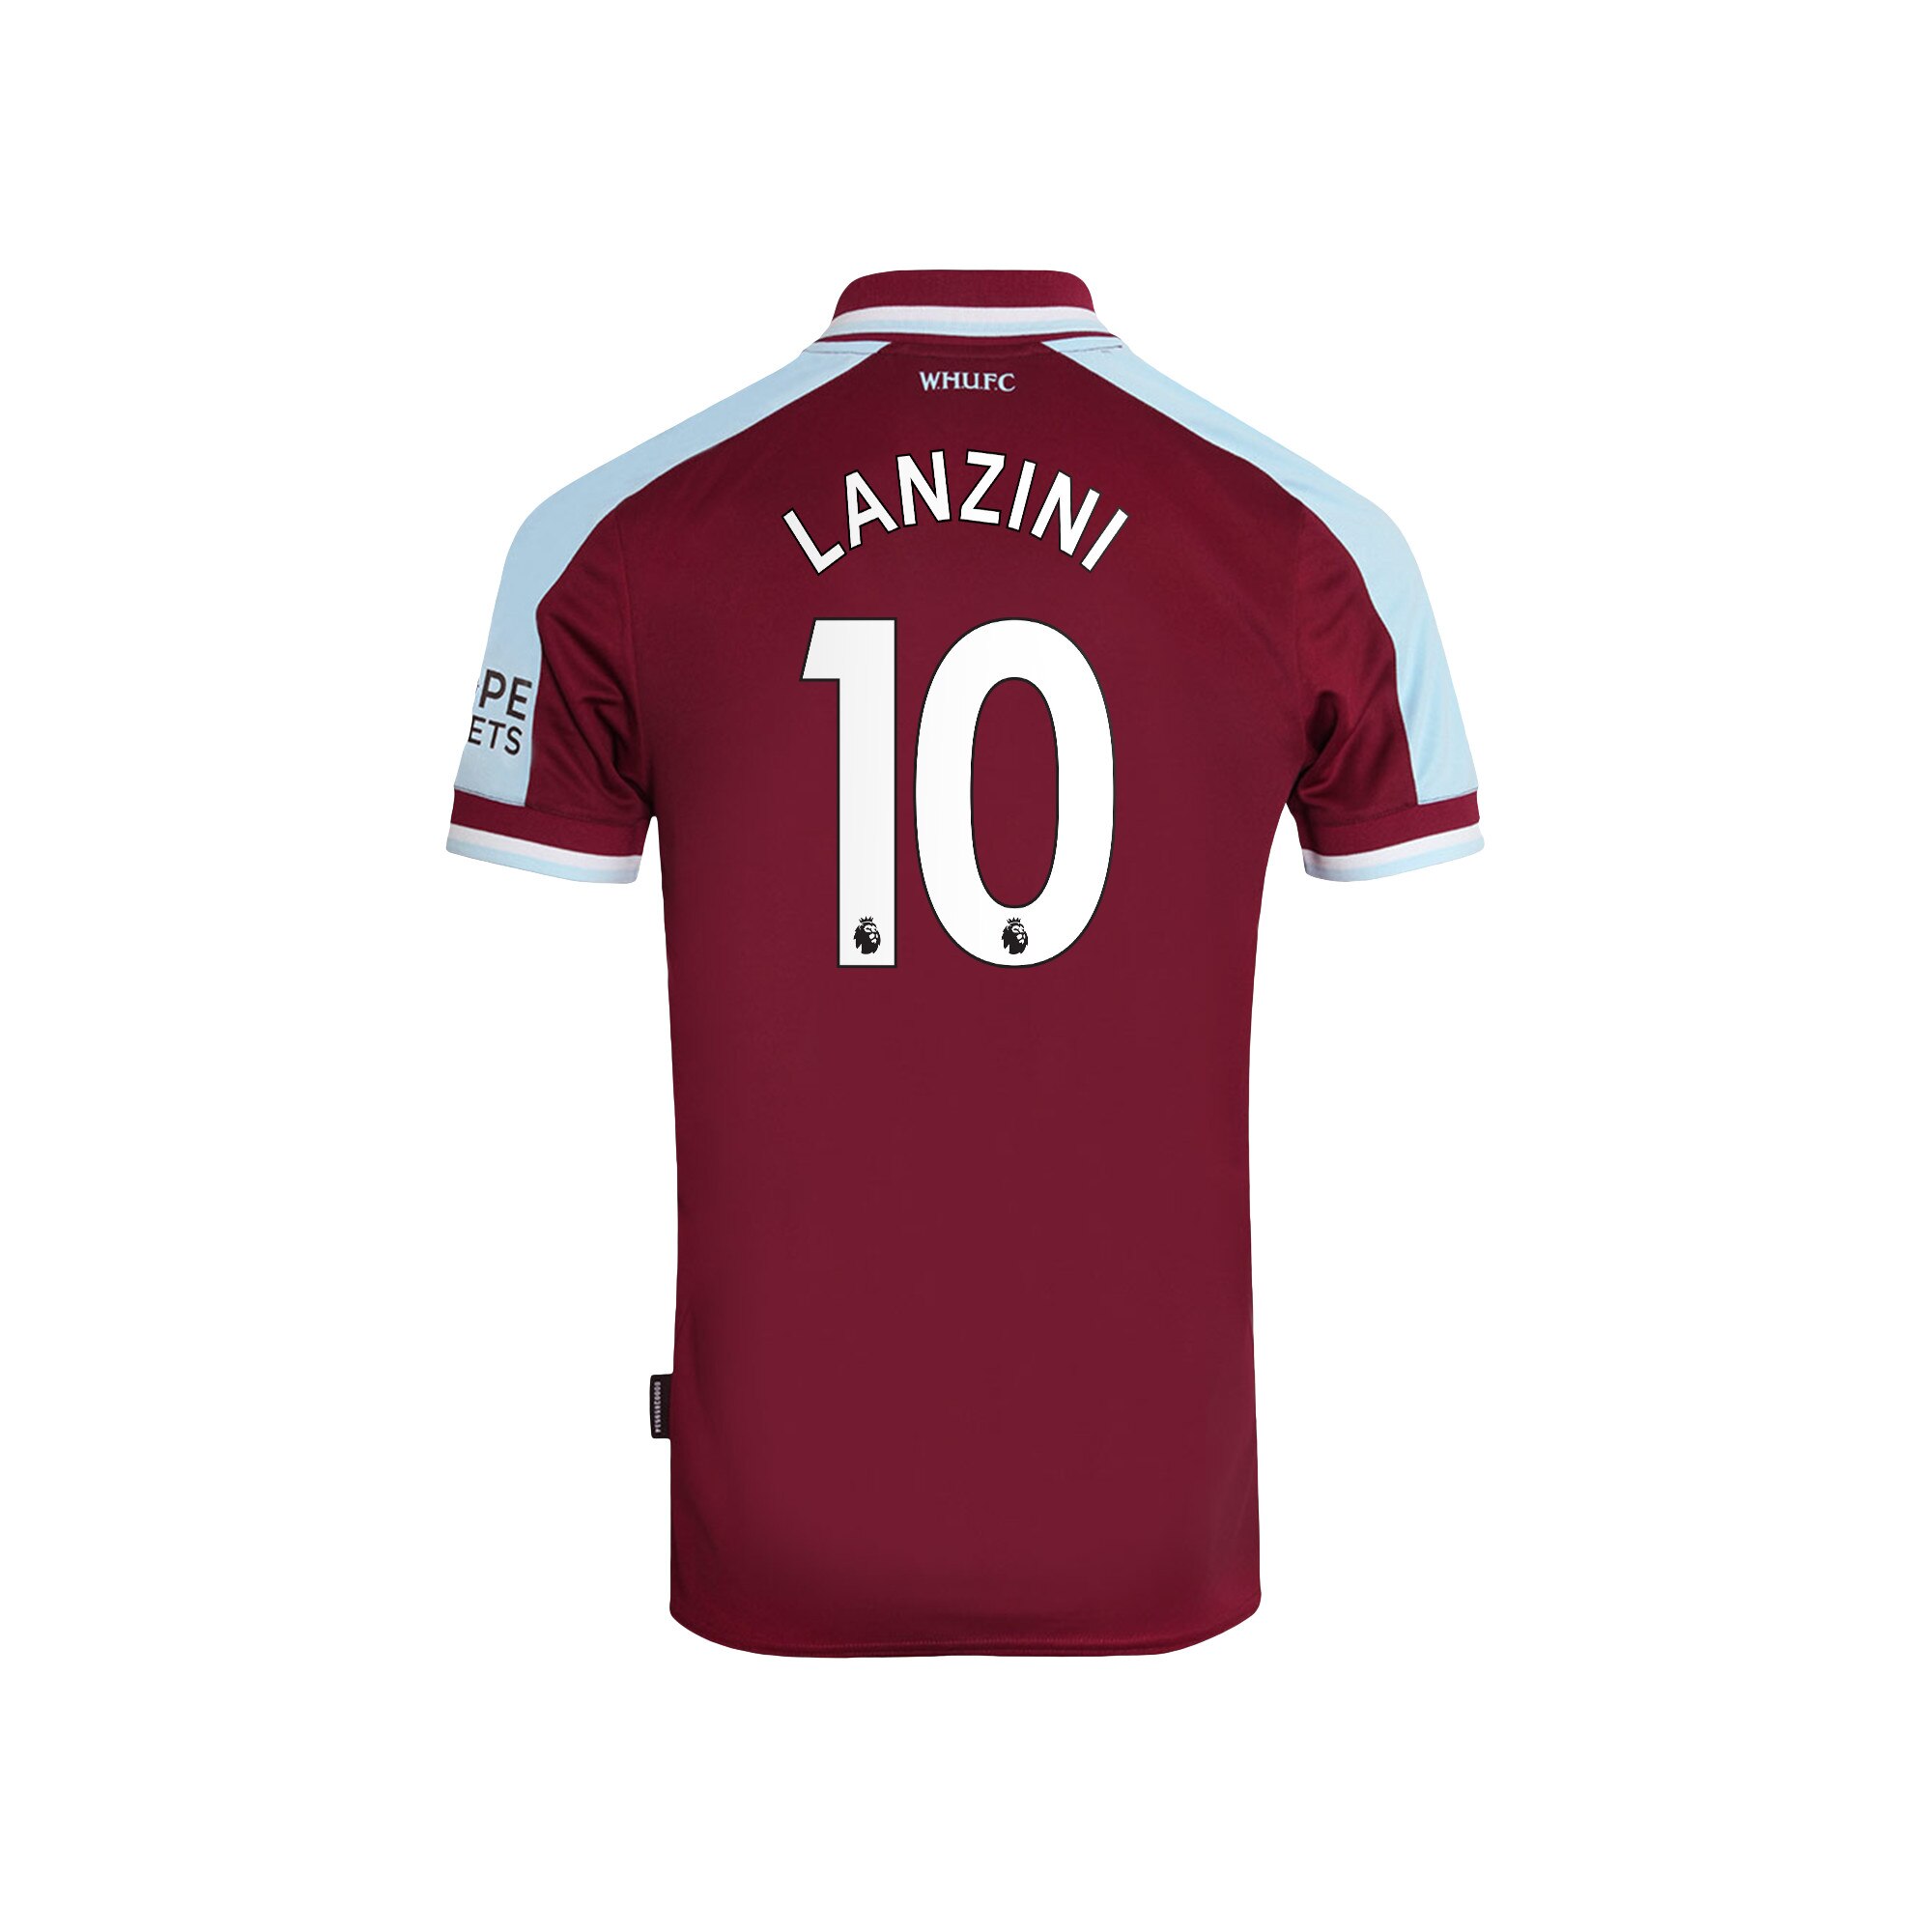 West Ham United Home Shirt 2021-22 with Lanzini 10 printing